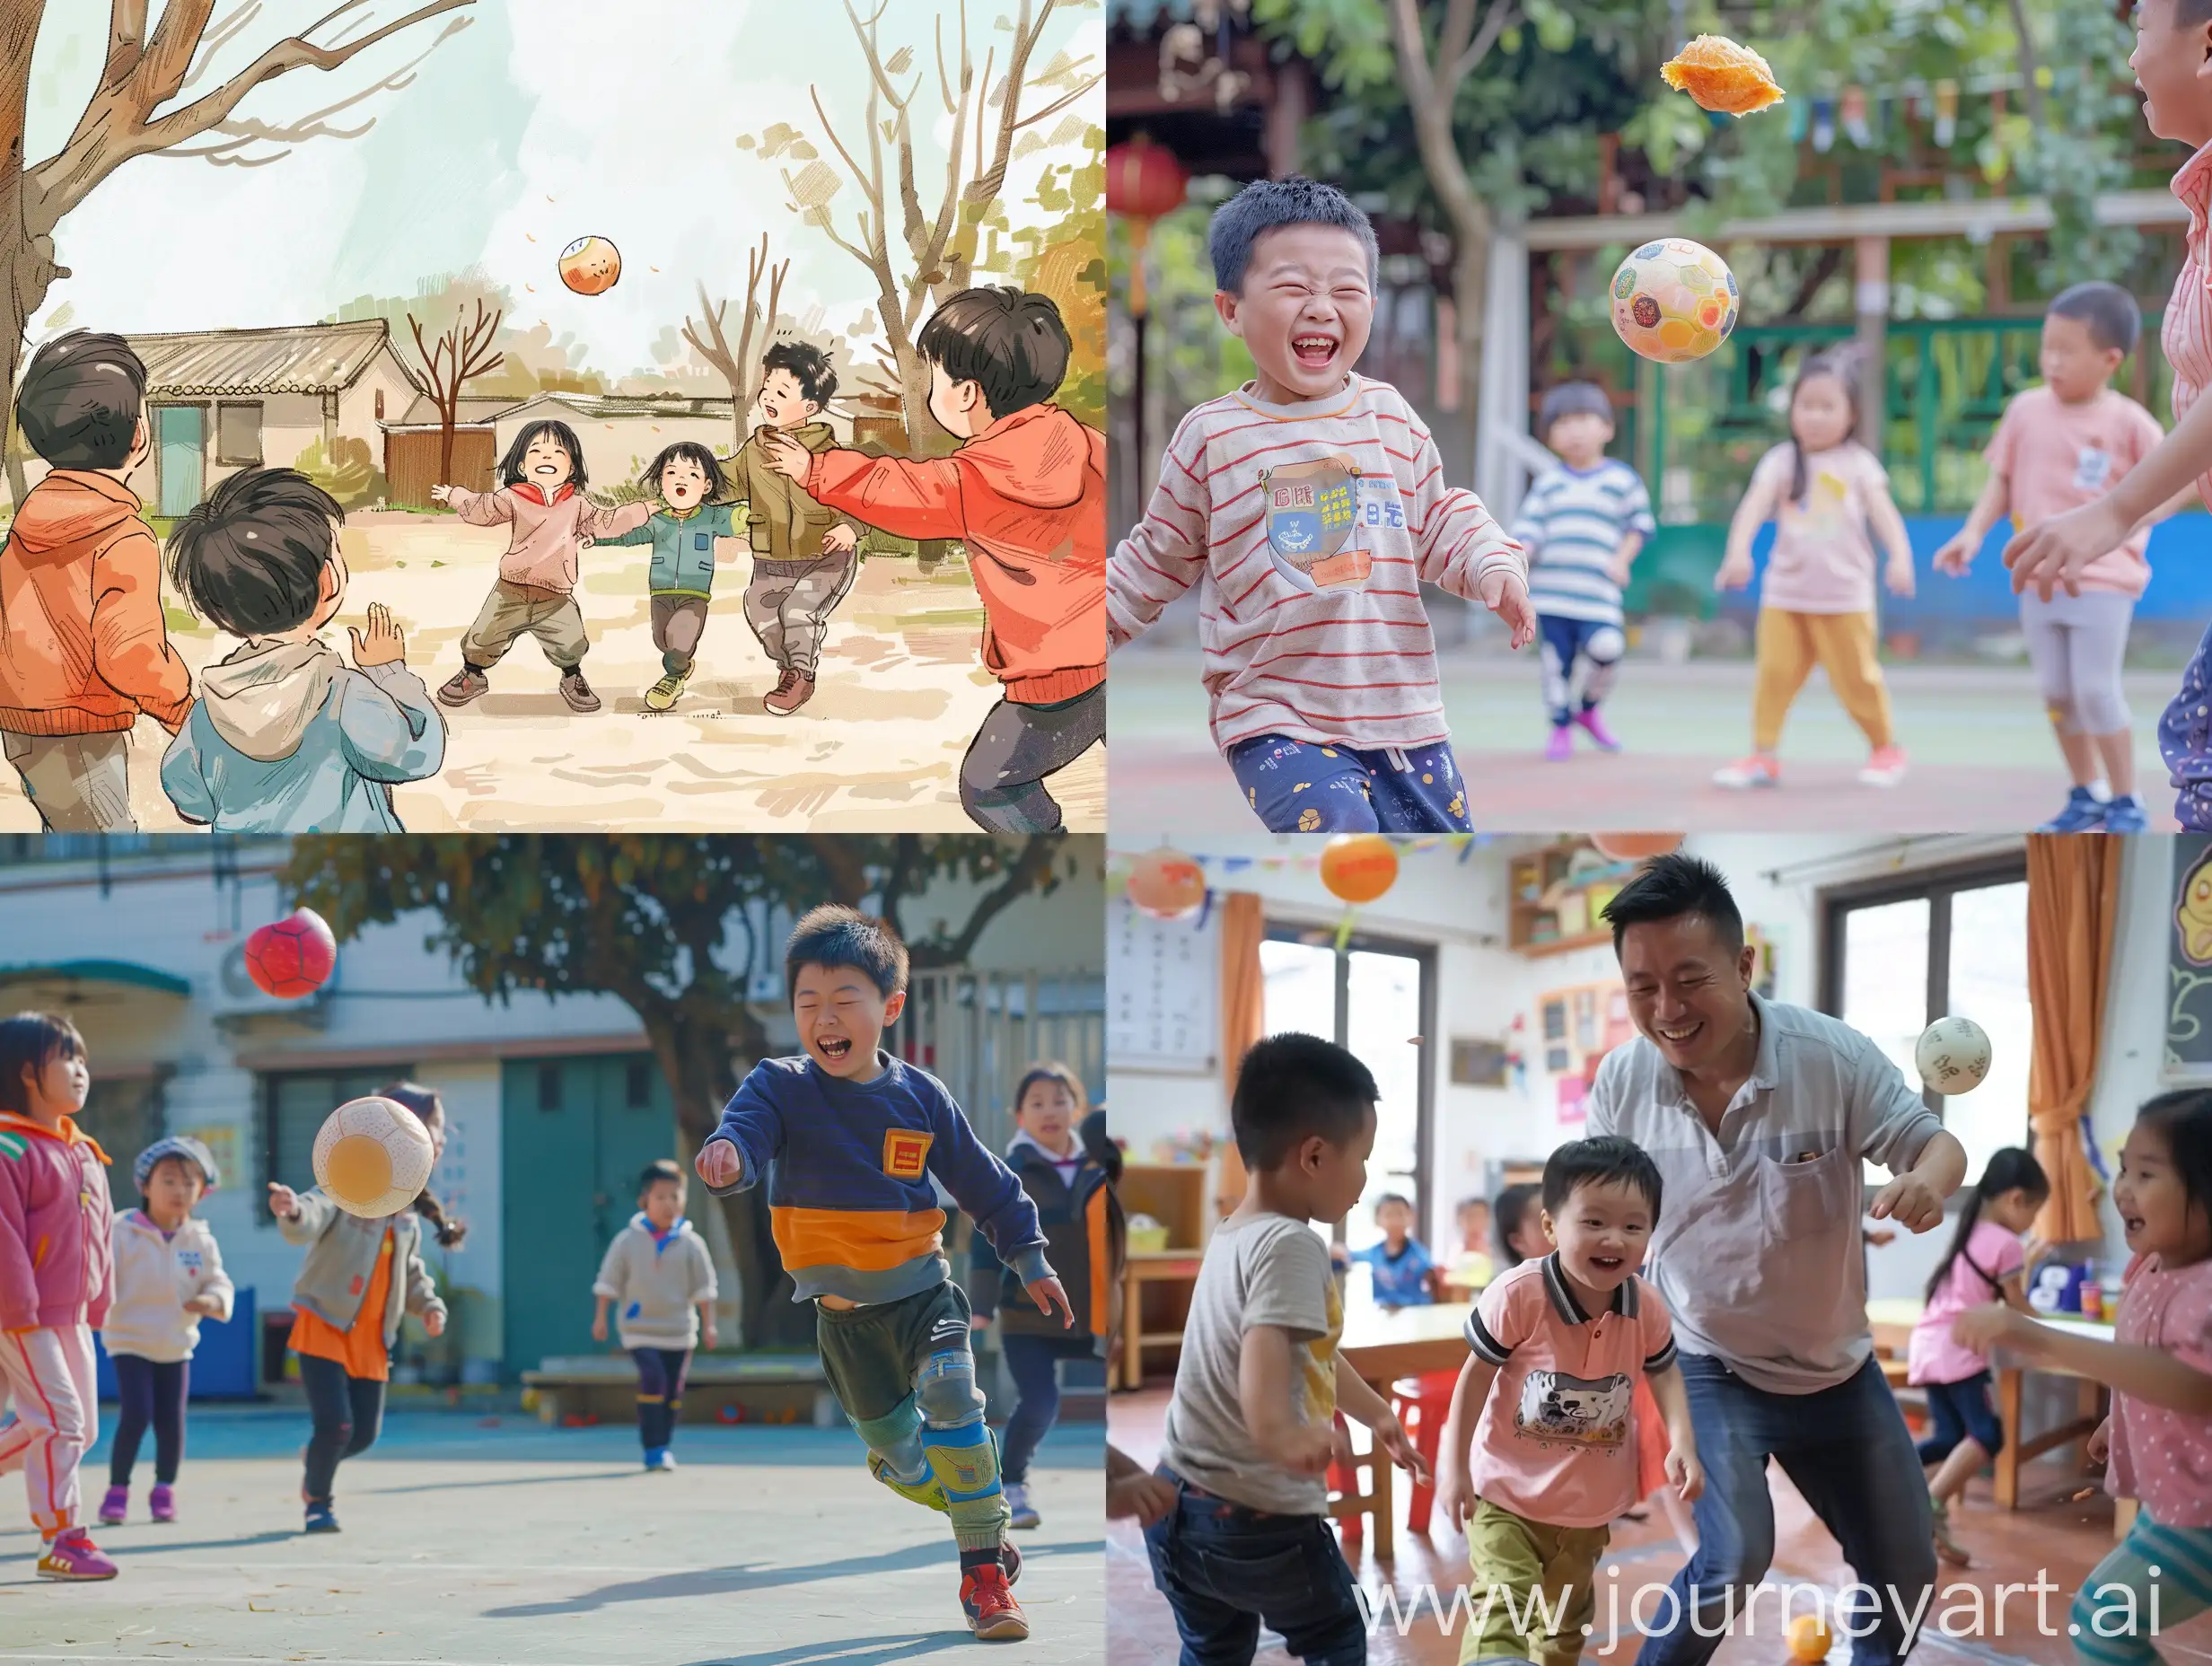 Joyful-Ball-Kicking-in-Kindergarten-Baozi-Mishap-Sparks-Laughter